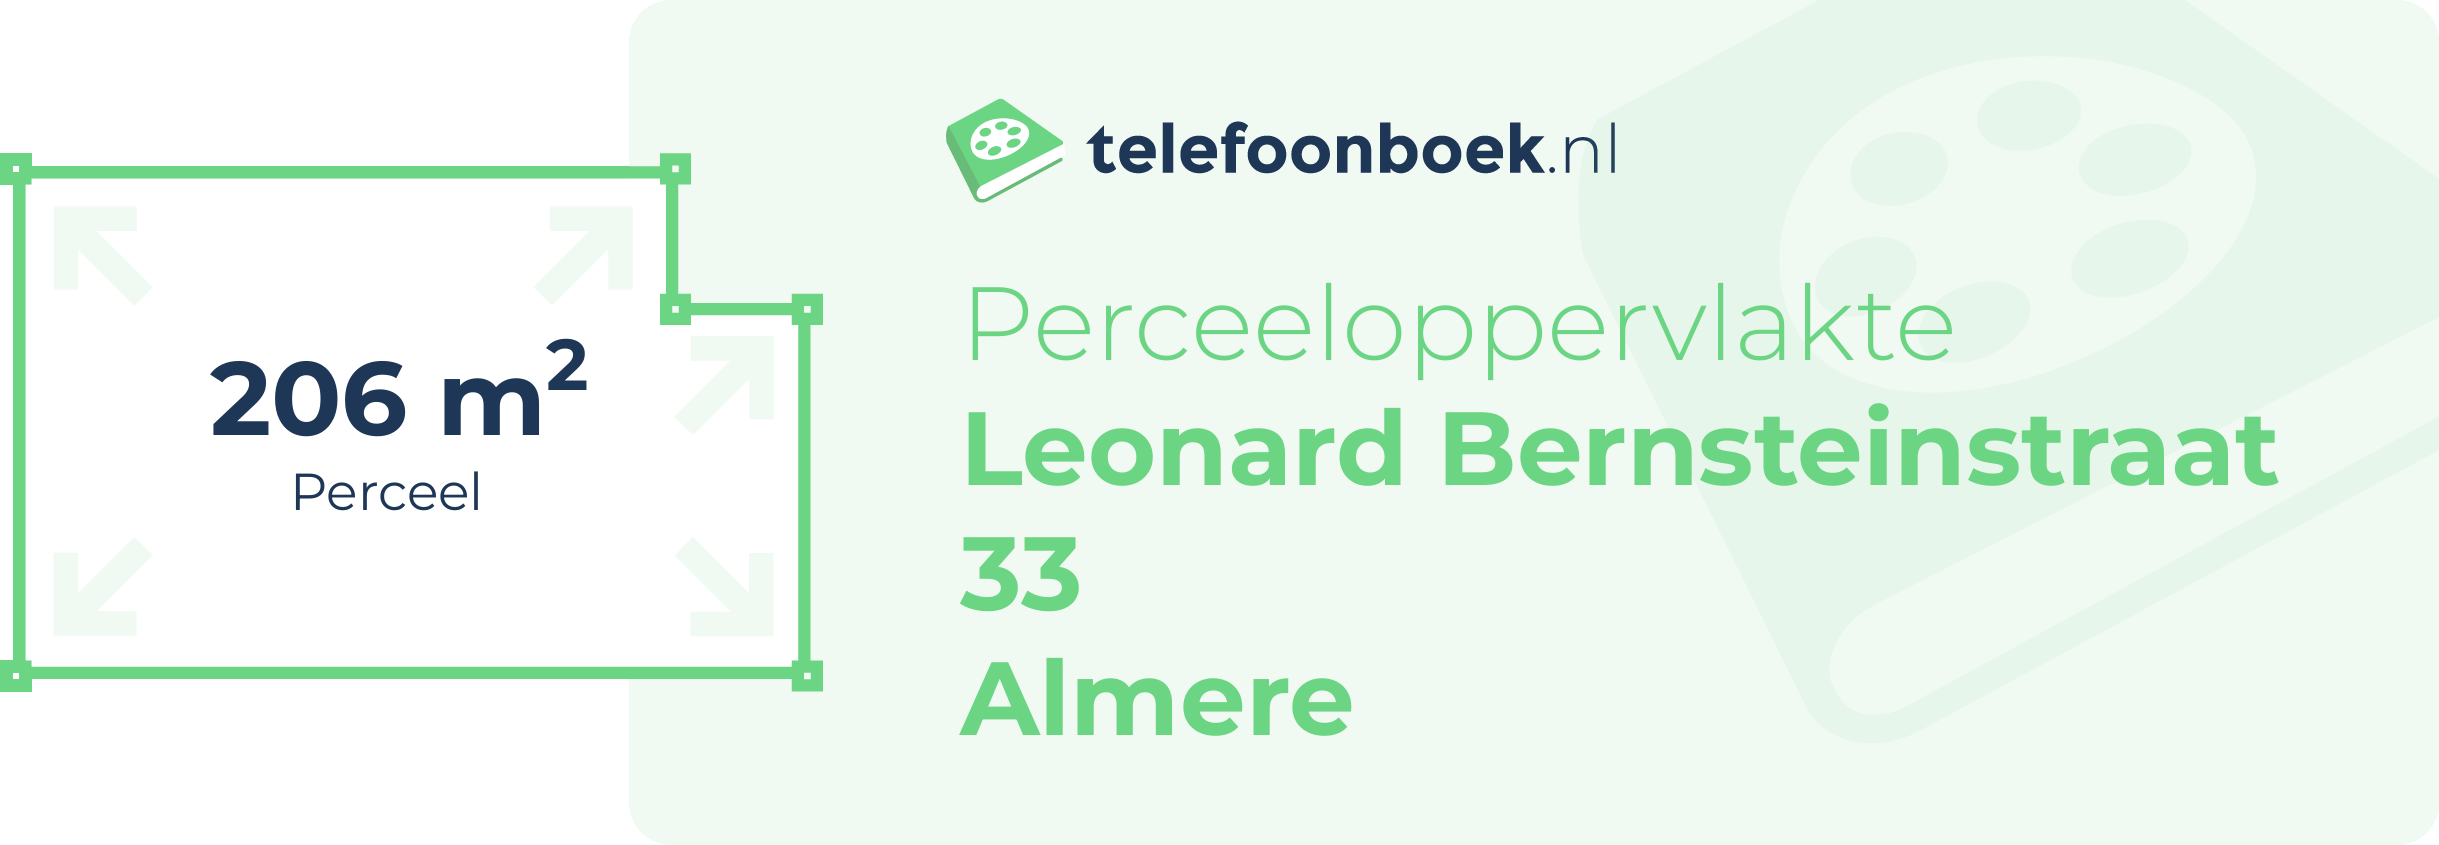 Perceeloppervlakte Leonard Bernsteinstraat 33 Almere